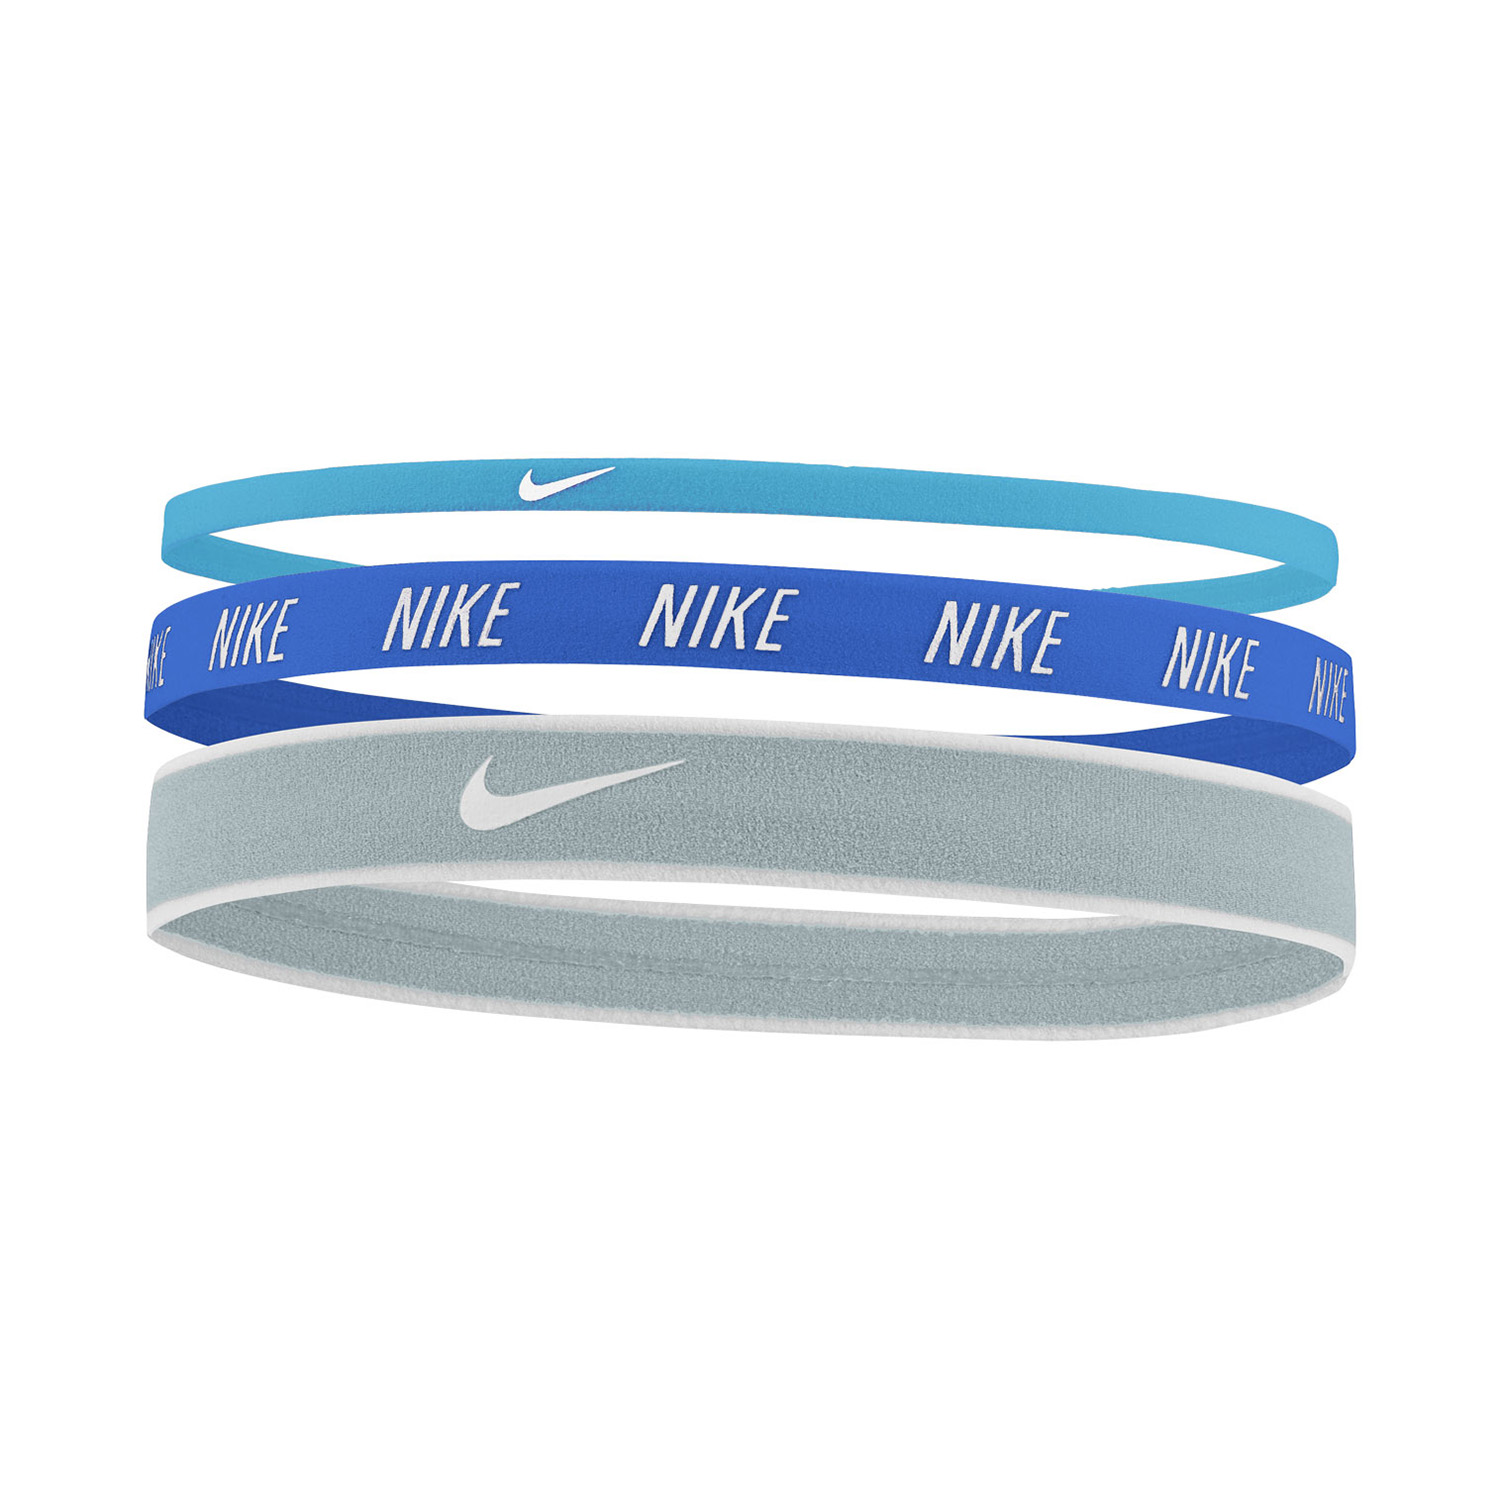 Nike Logo x 3 Mini Hairbands - Baltic Blue/Hyper Royal/Ocean Bliss